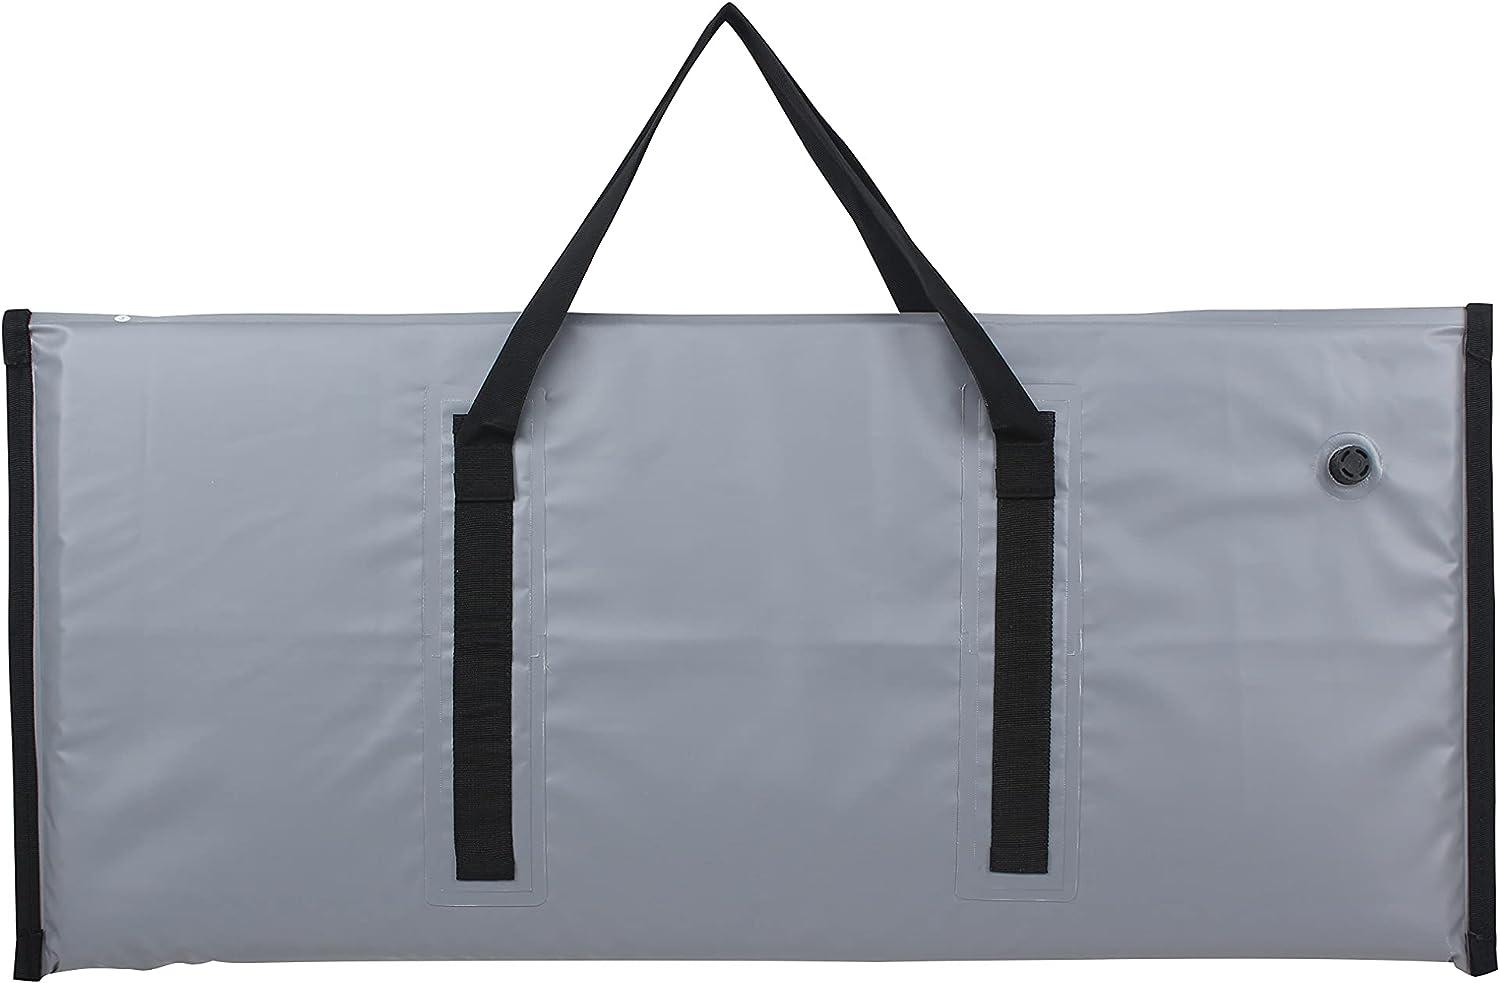 25x23'' Airtight Tournament Weigh Bag  Buffalo gears.100% Leakproof &  Waterproof Fish Cooler Bag